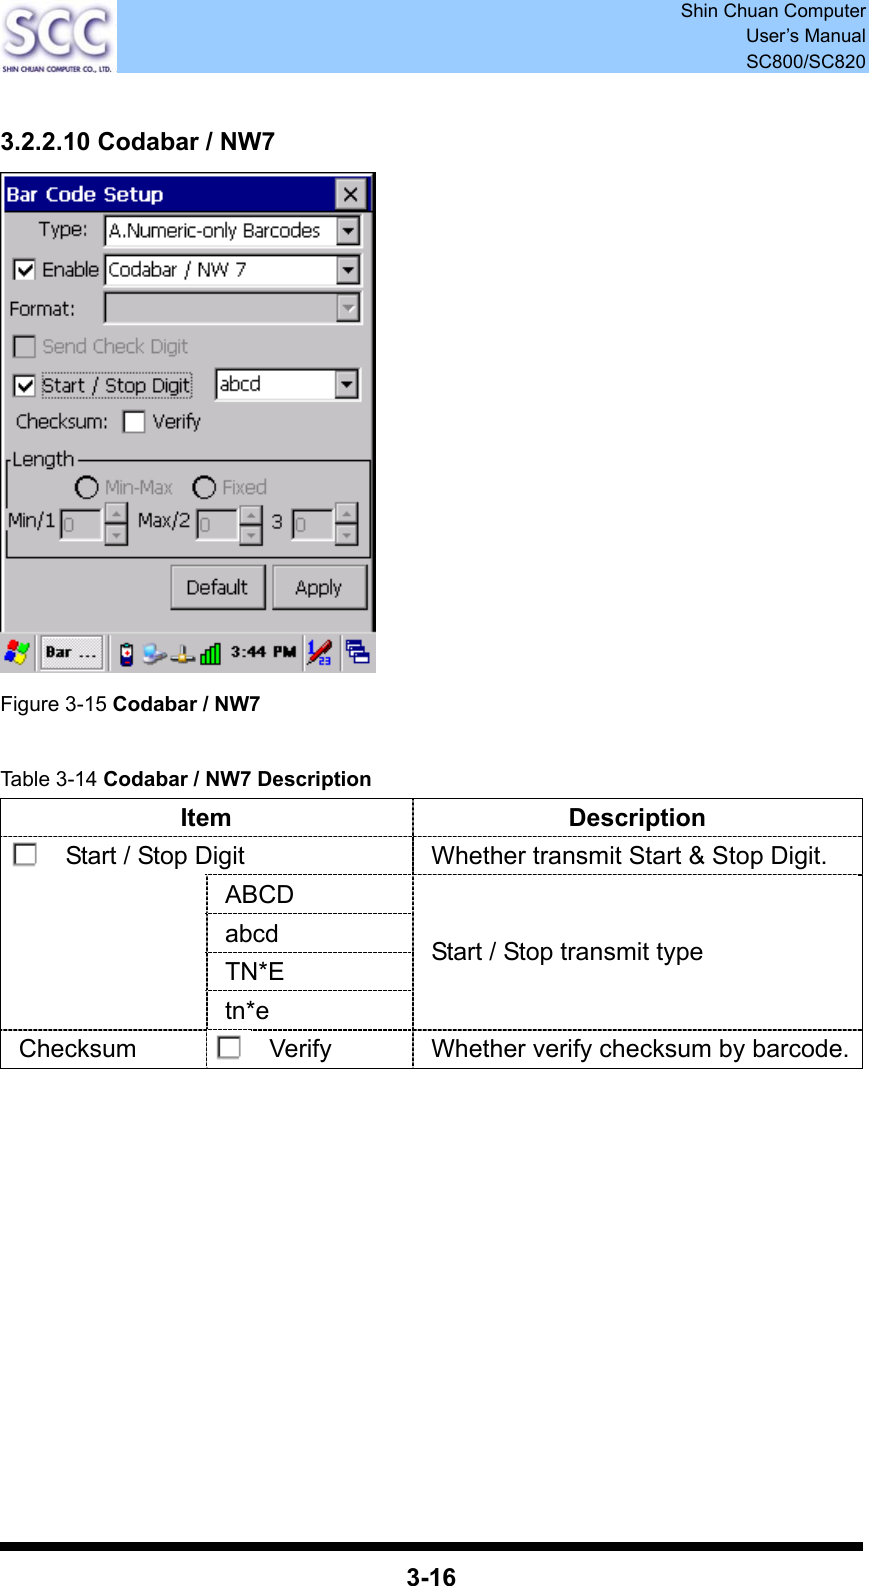  Shin Chuan Computer User’s Manual SC800/SC820  3-16  3.2.2.10 Codabar / NW7  Figure 3-15 Codabar / NW7  Table 3-14 Codabar / NW7 Description Item Description Start / Stop Digit  Whether transmit Start &amp; Stop Digit. ABCD abcd  TN*E  tn*e Start / Stop transmit type Checksum  Verify  Whether verify checksum by barcode.           